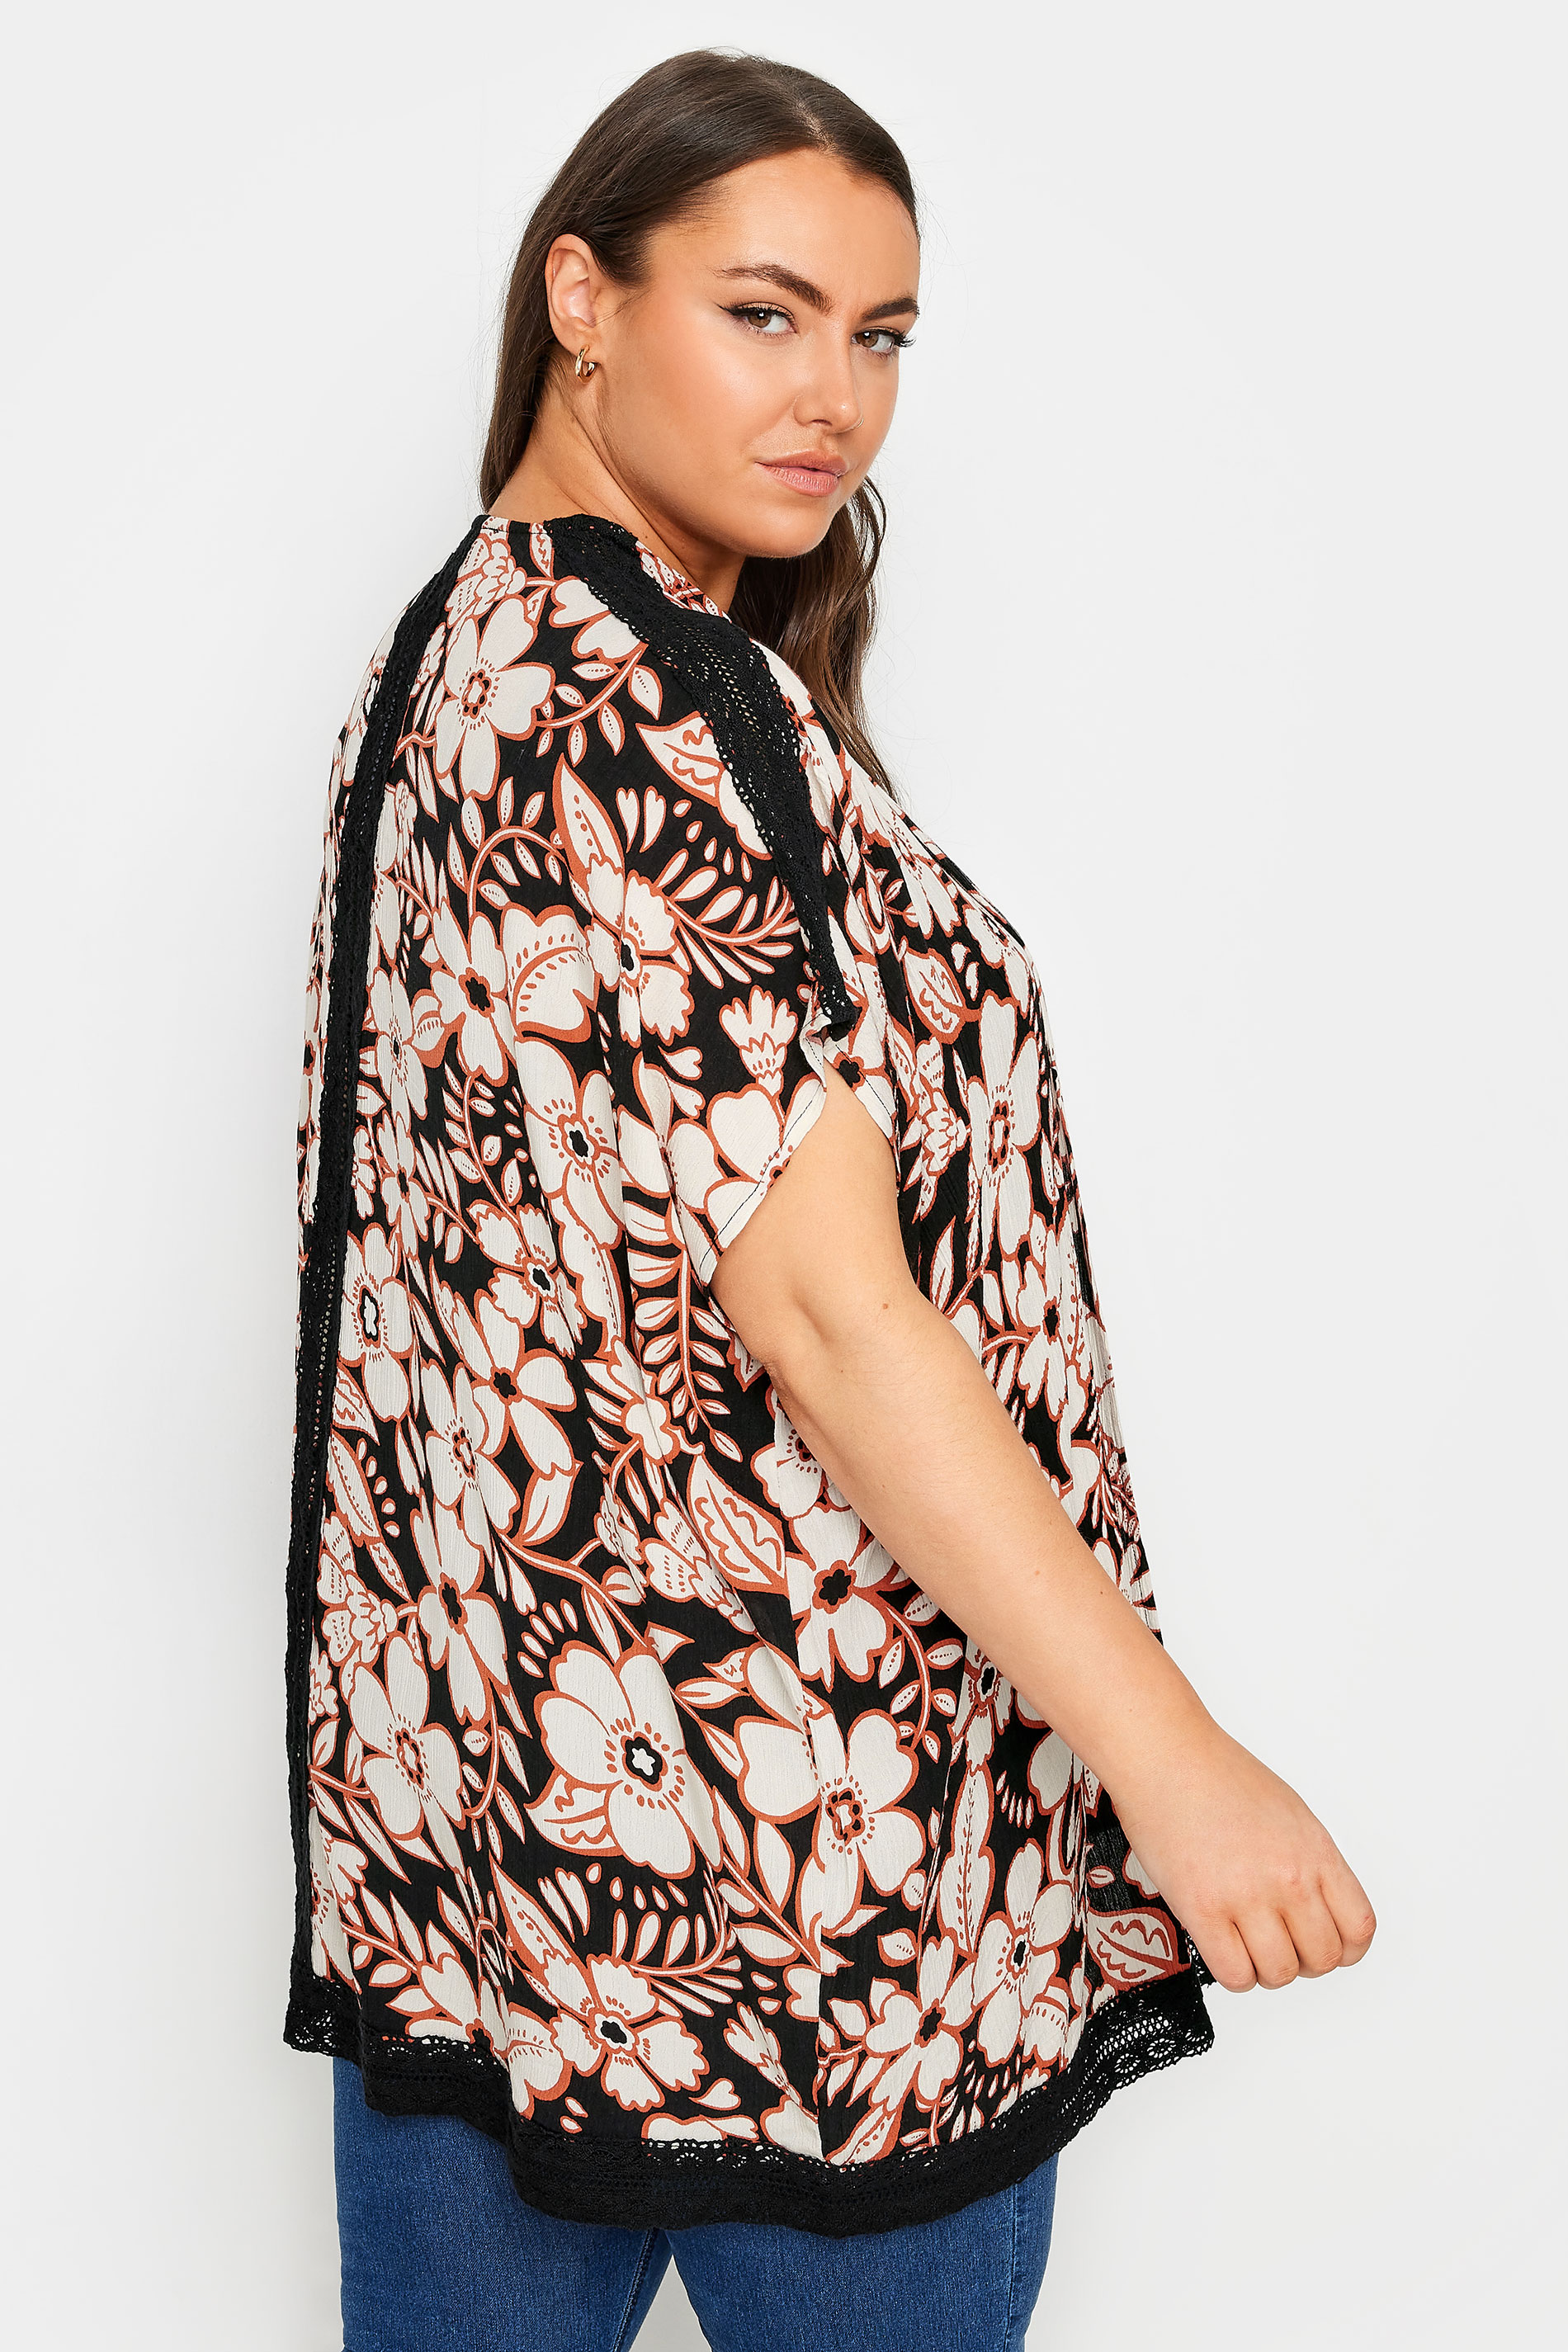 YOURS Plus Size Black Floral Print Crochet Trim Kimono | Yours Clothing 3